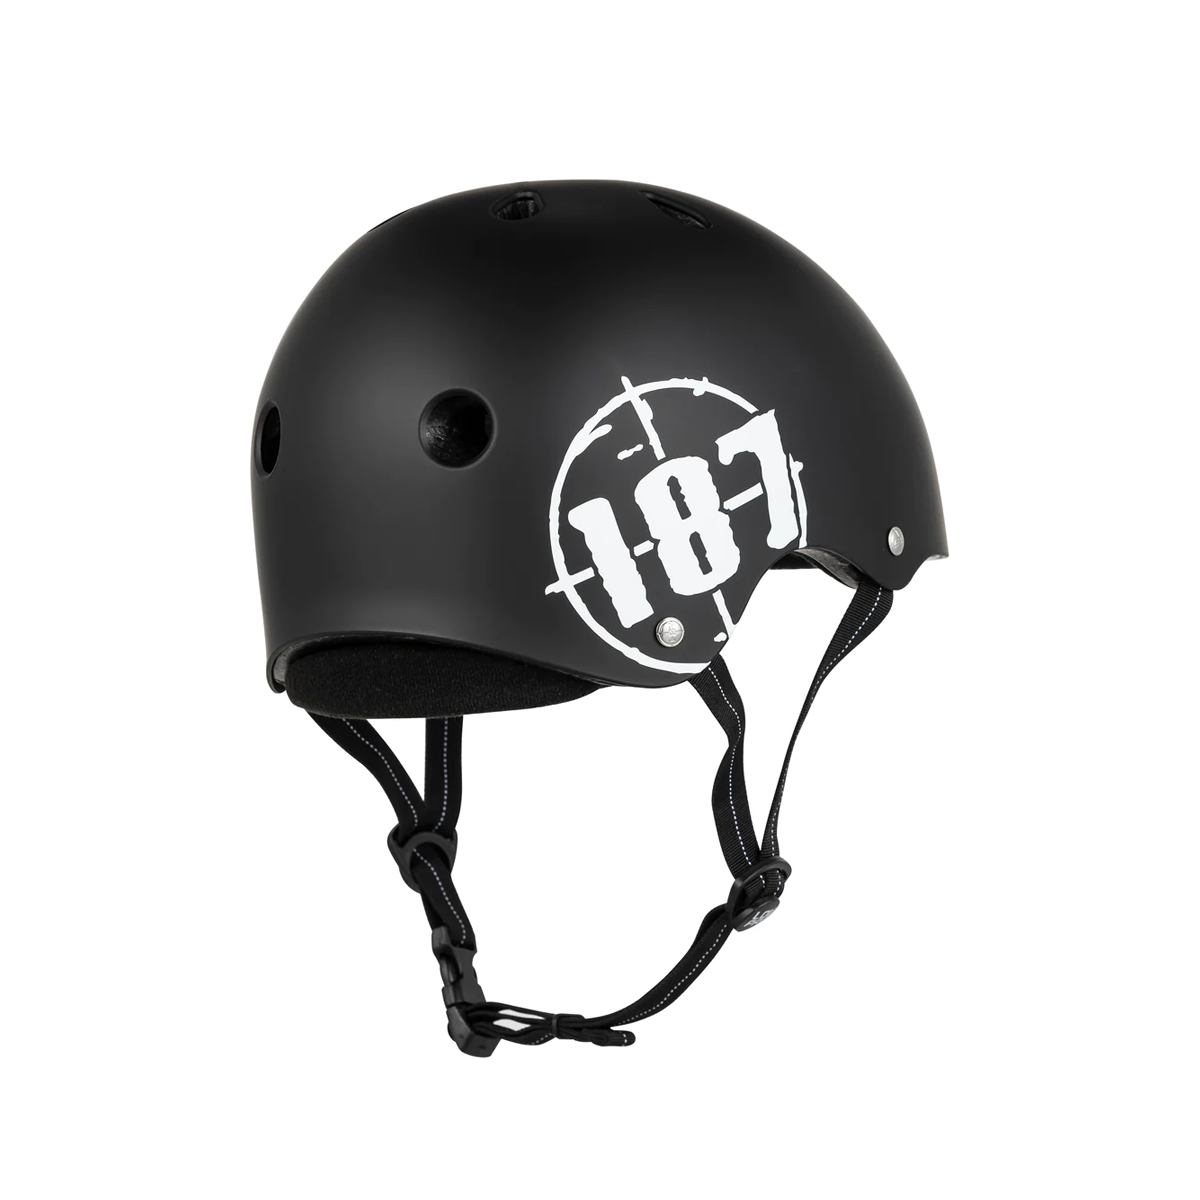 187 Killer Pads Low Pro Certified Skate Helmet - Matte Black